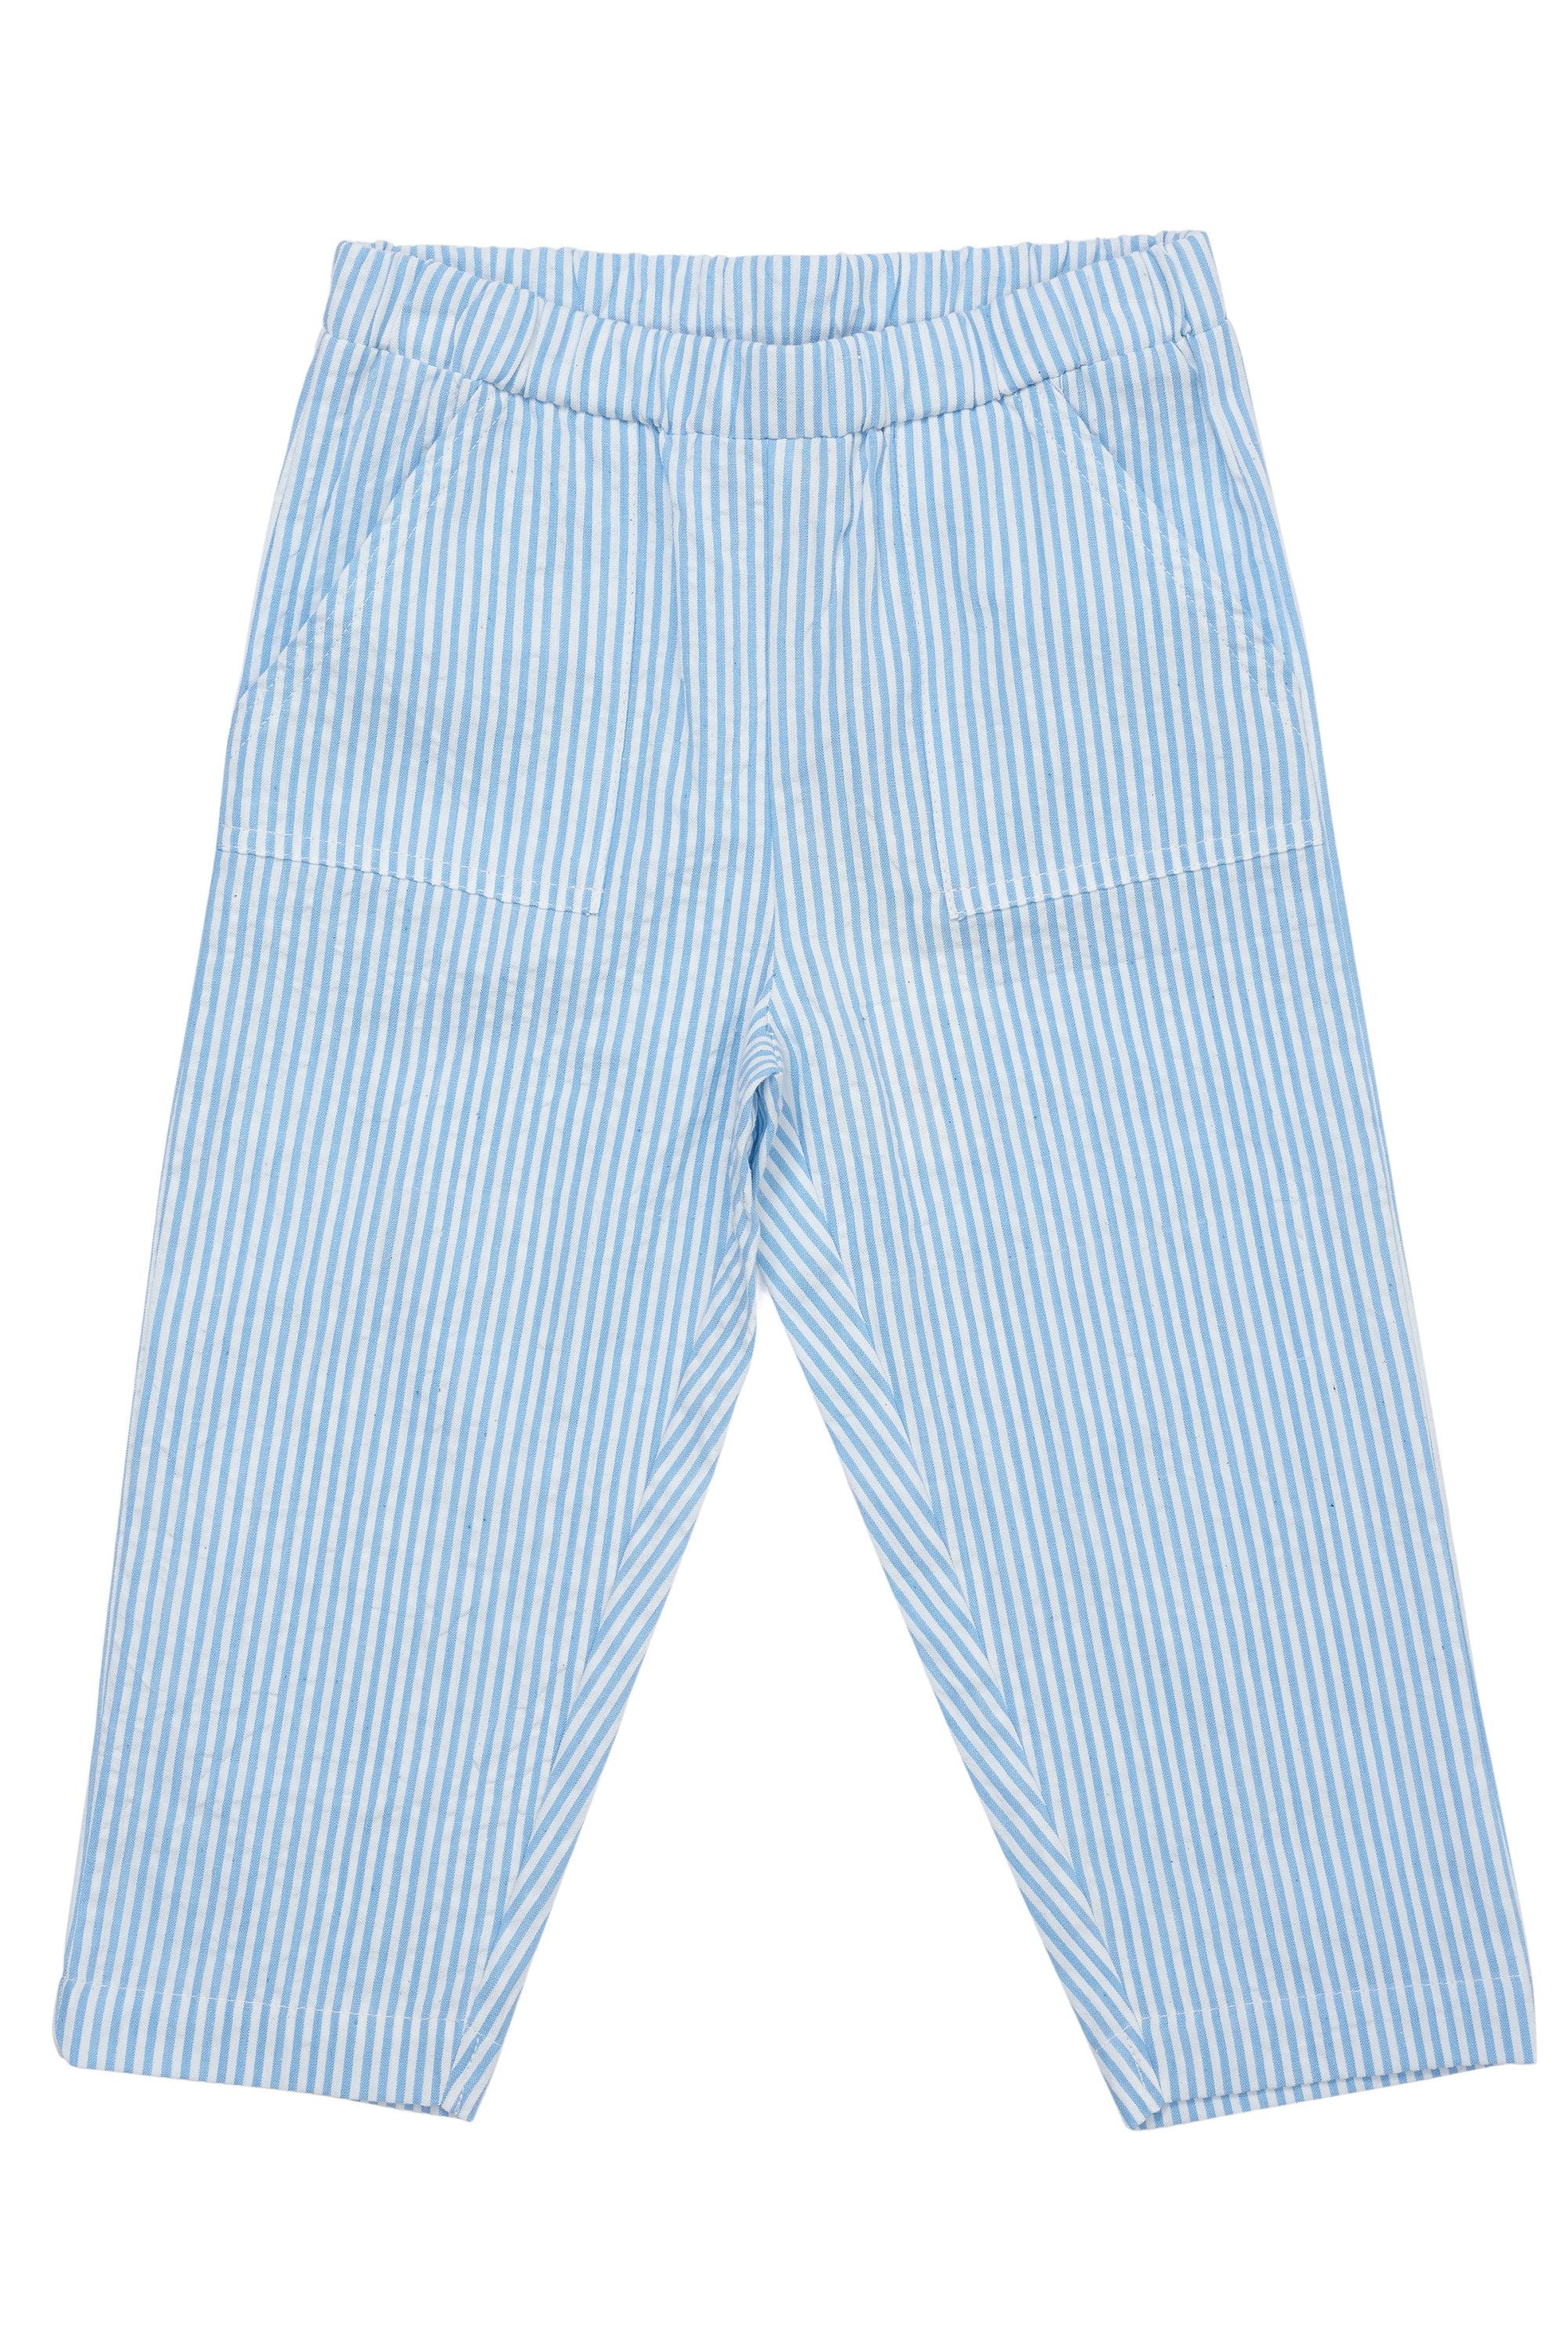 Copenhagen Colors Pants - Sky Blue/Cream stripe